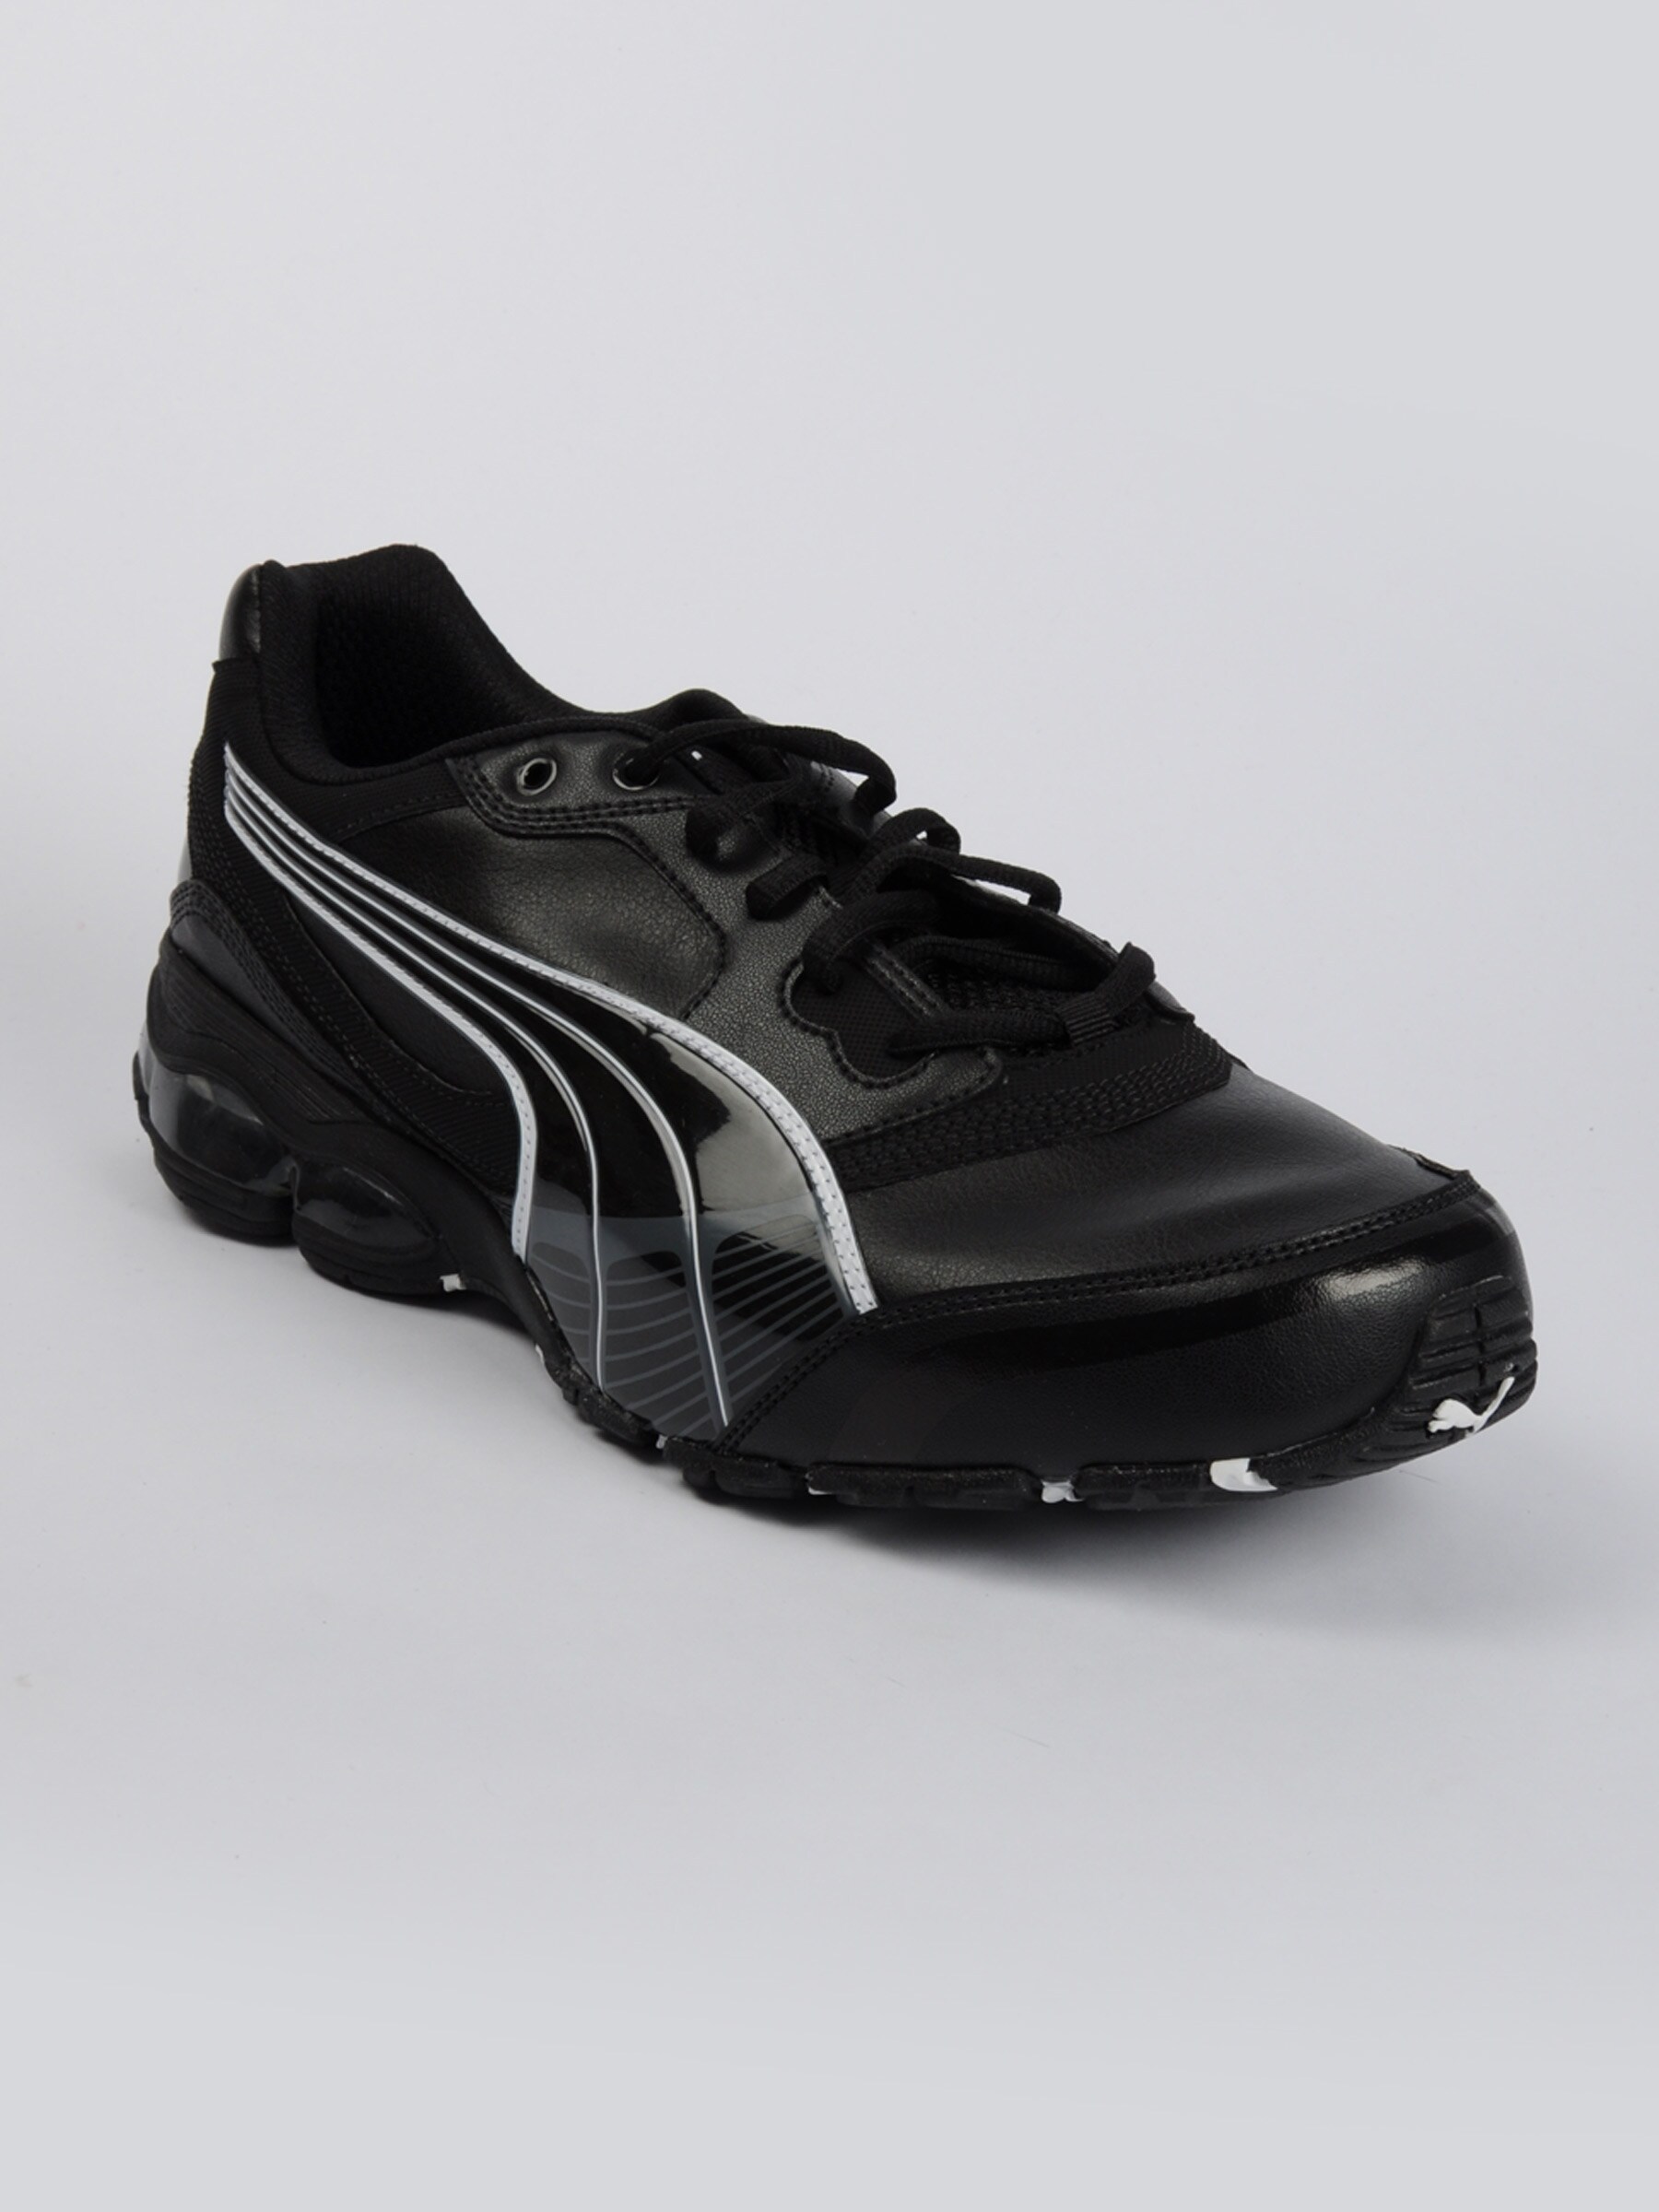 Puma Men Cell Varex SL Black Sports Shoes